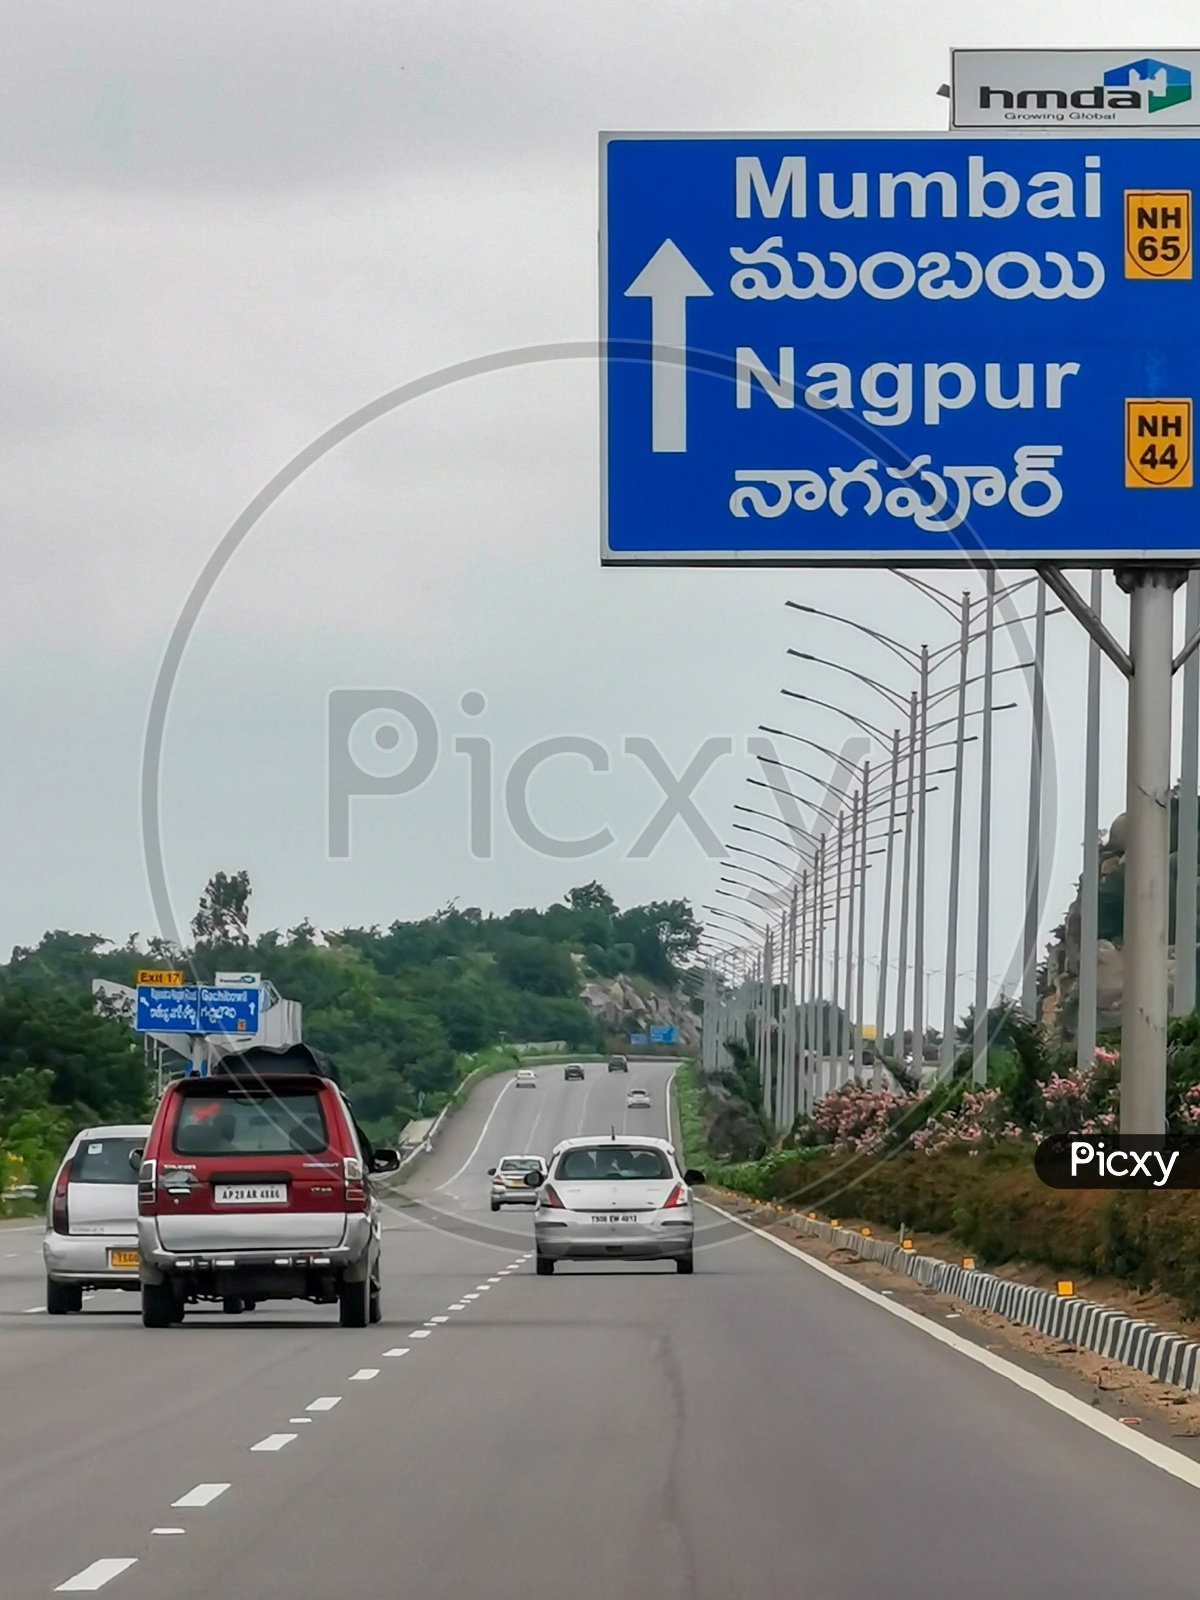 Nagpur And Mumbai Highway In Hyderabad